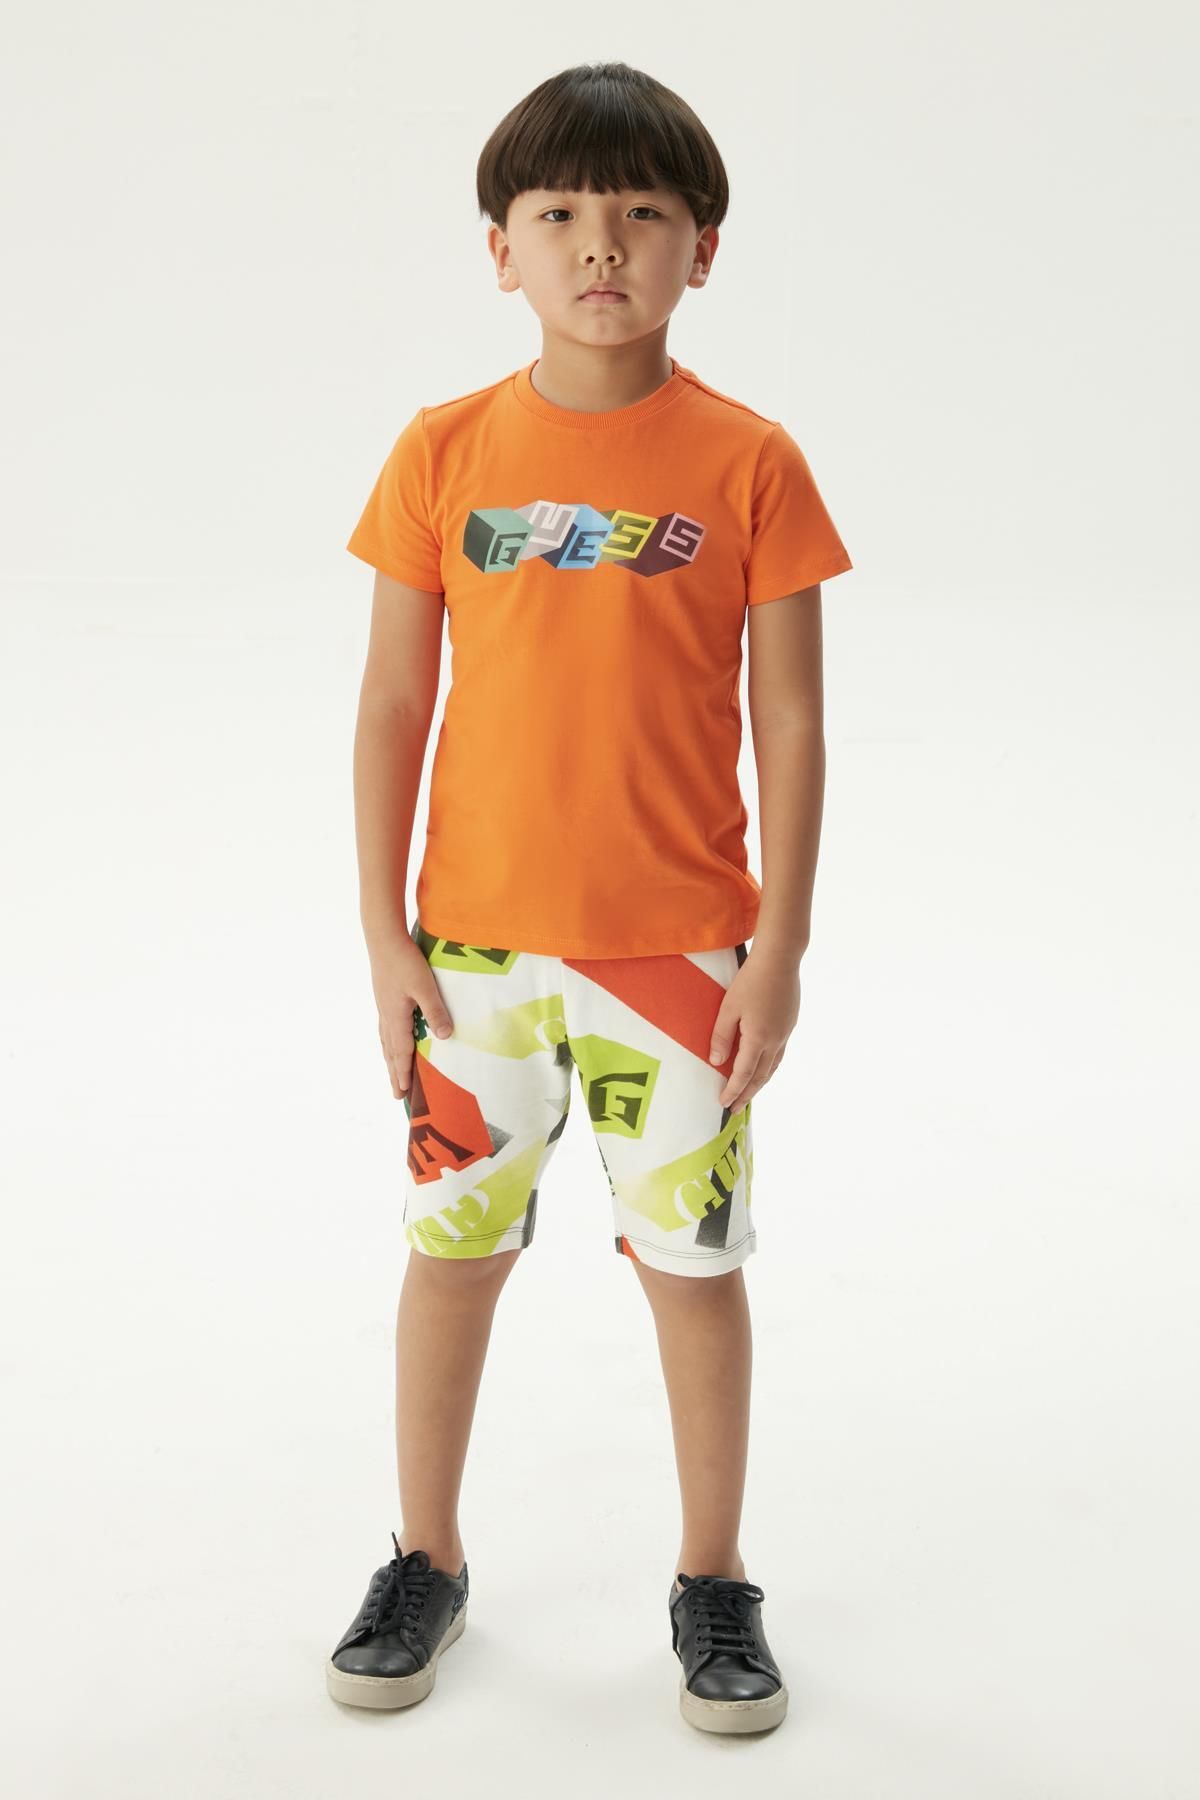 Guess Bg Store Erkek Çocuk Oranj T-shirt